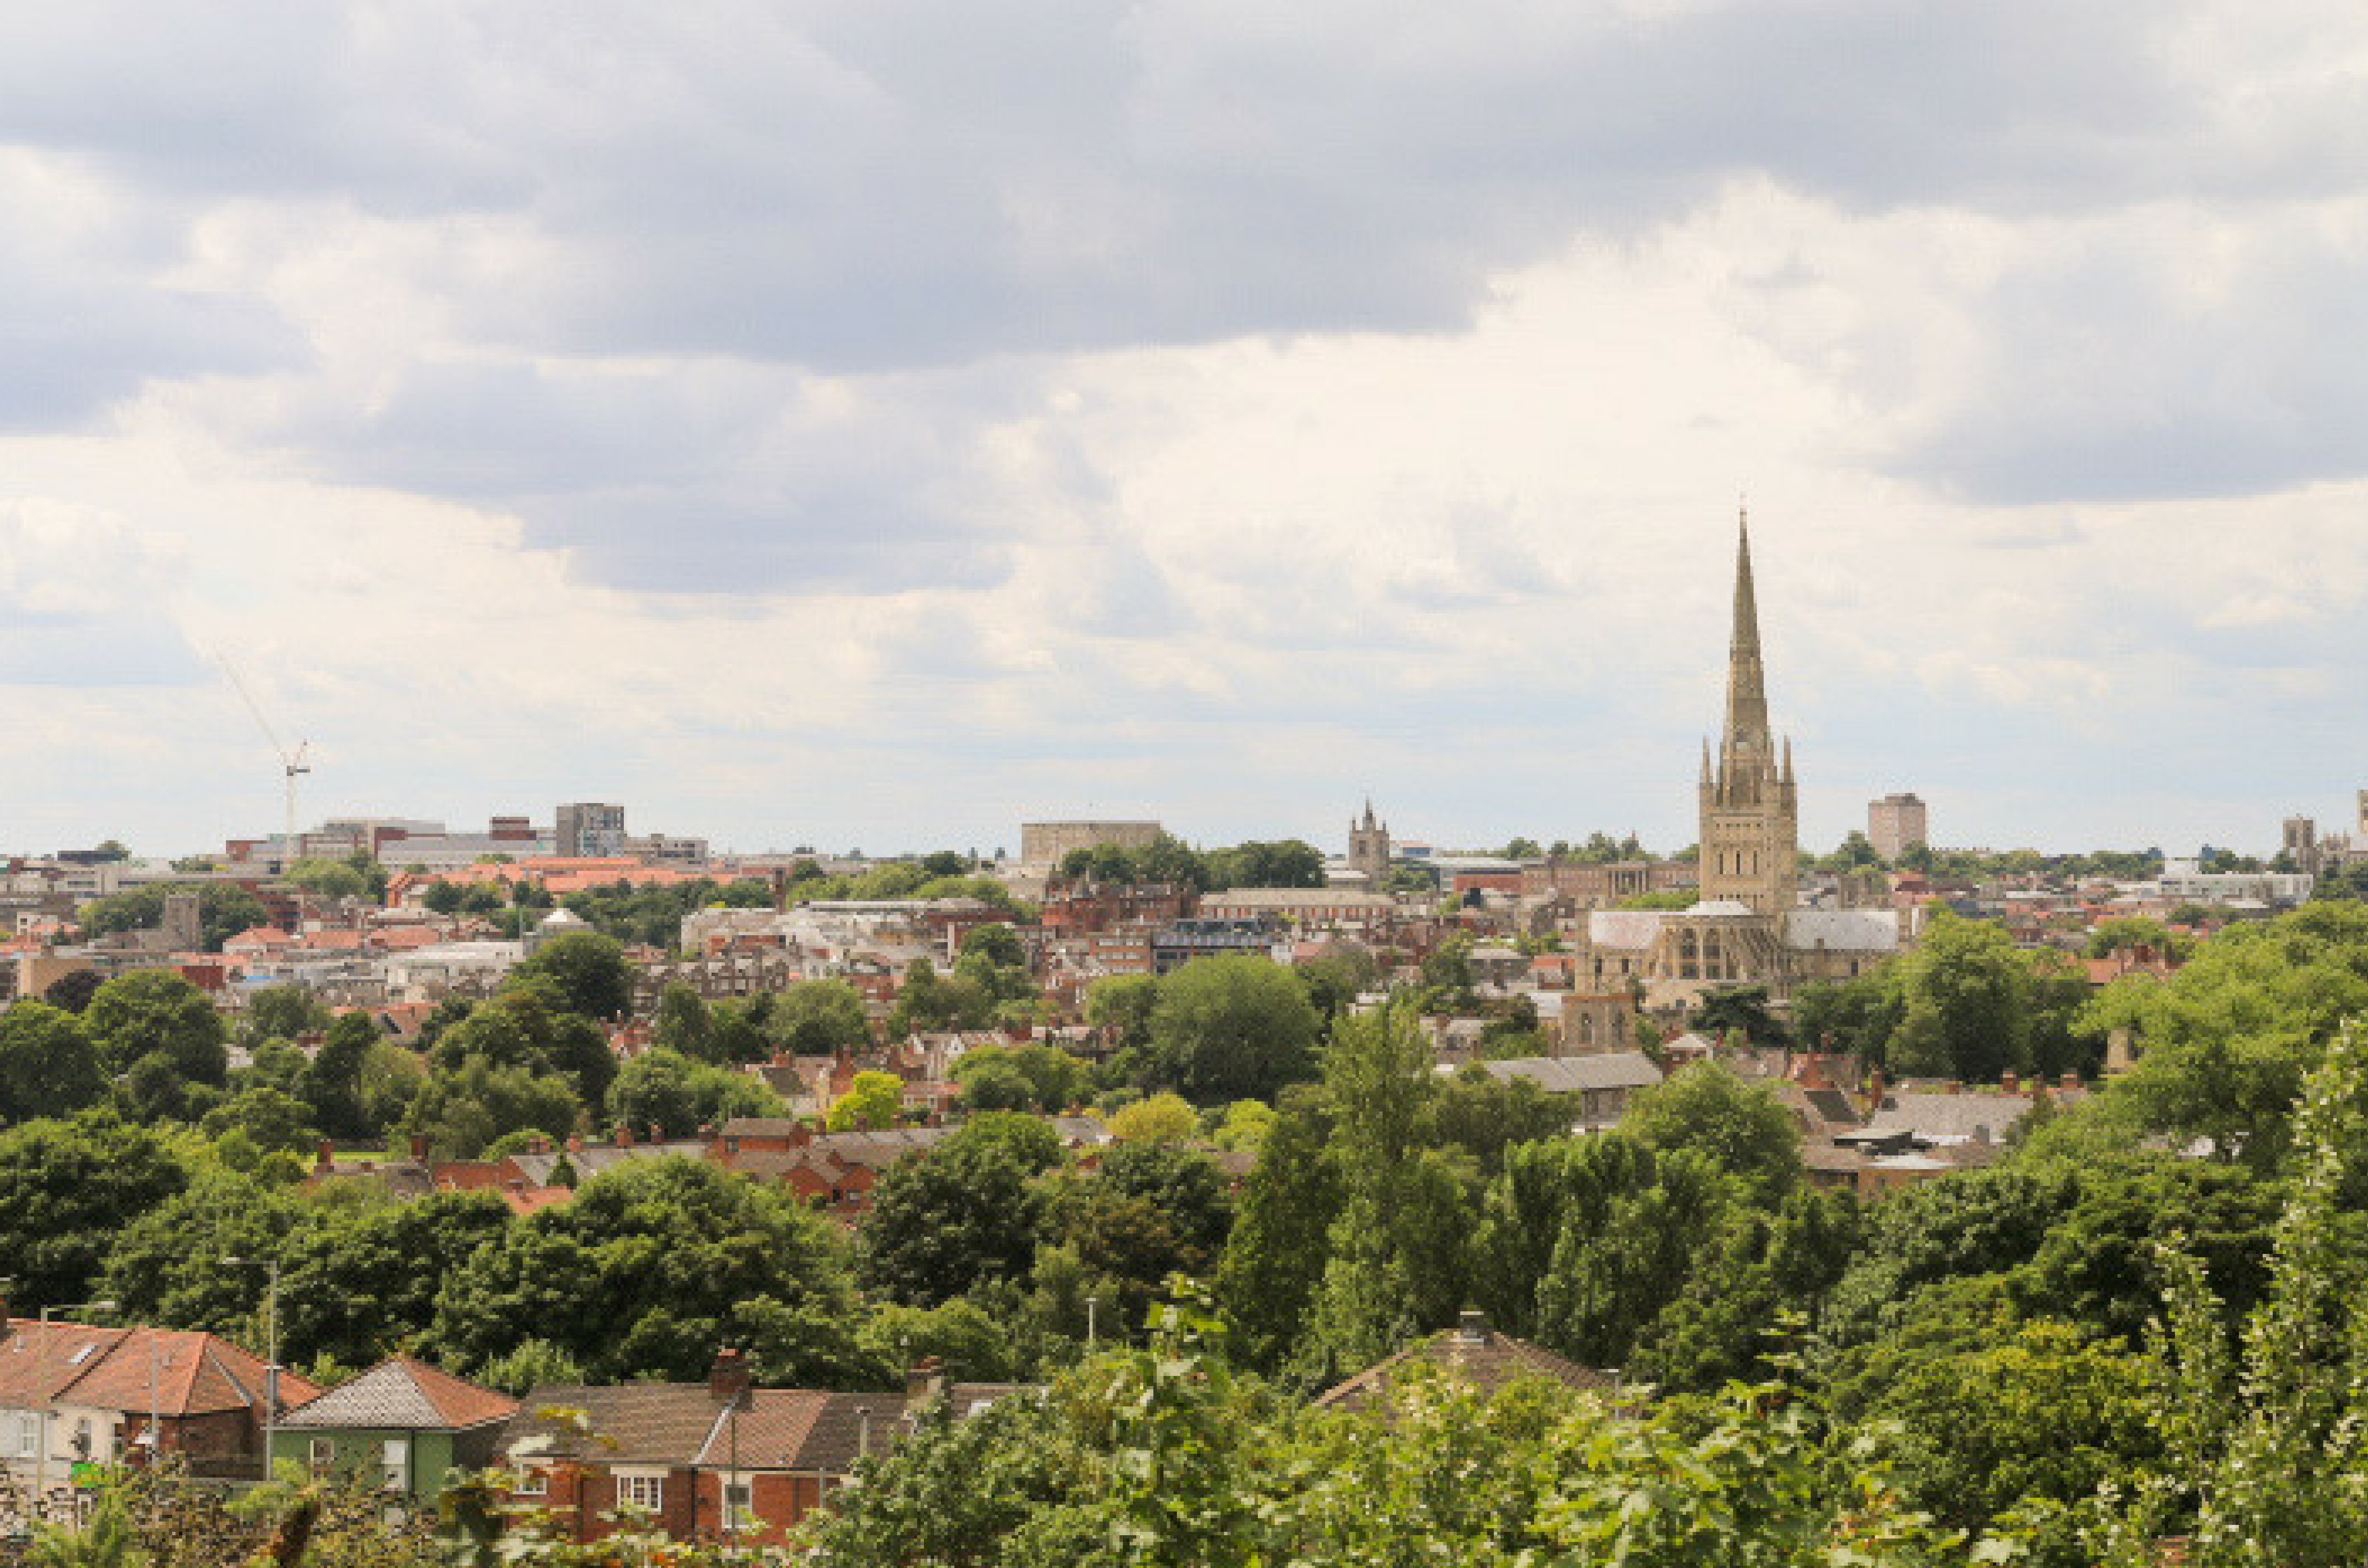 View over Norwich city centre